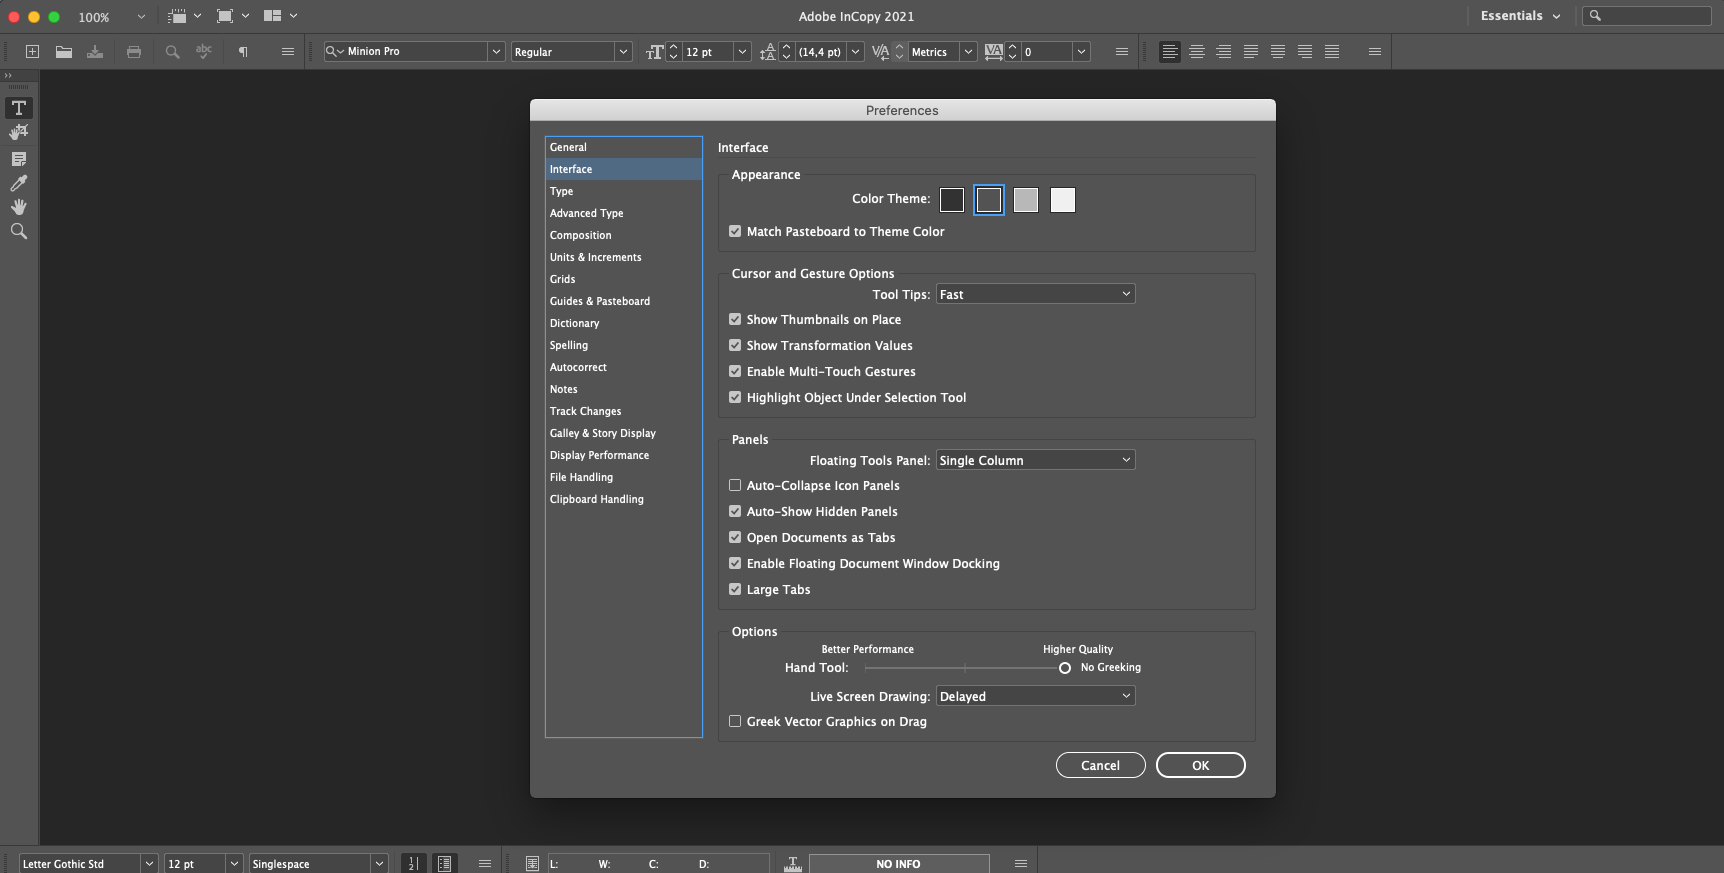 Adobe InCopy 2020 16.2 : Appearance tab